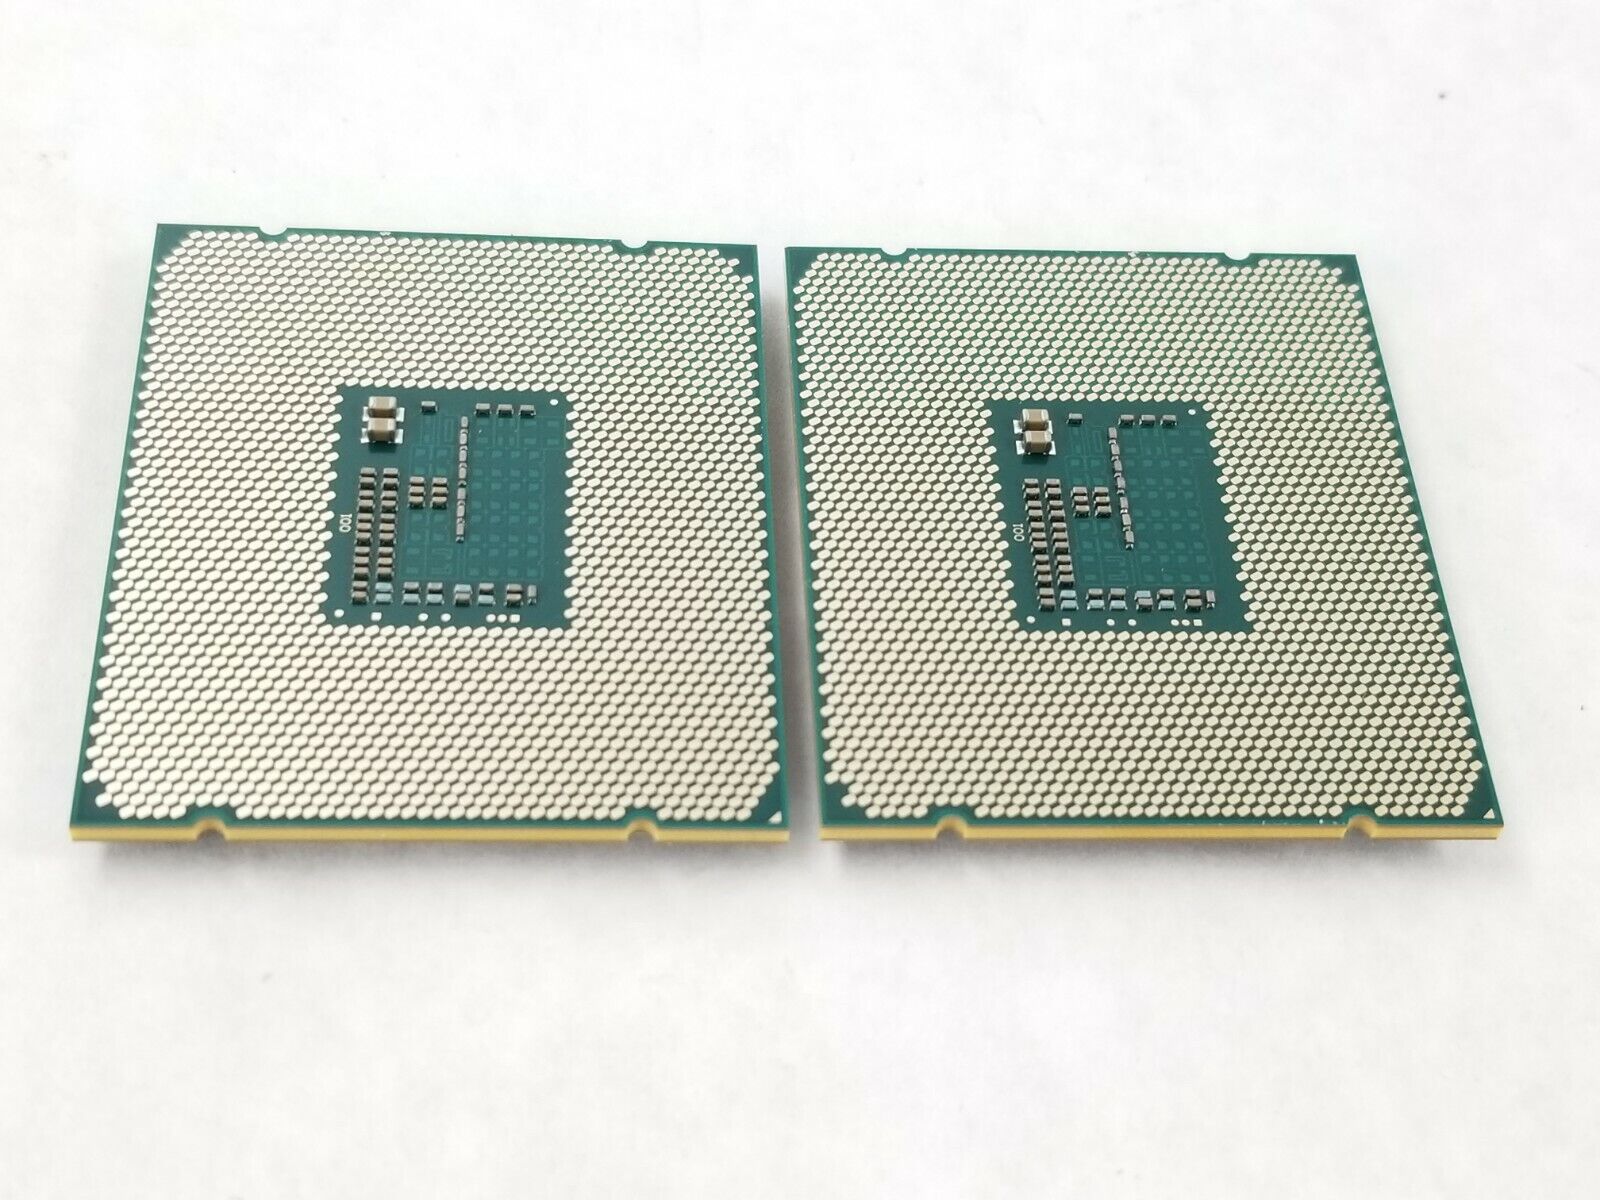 Intel Xeon E5-2630V3 2.4GHz Eight Core (BX80644E52630V3) Processor